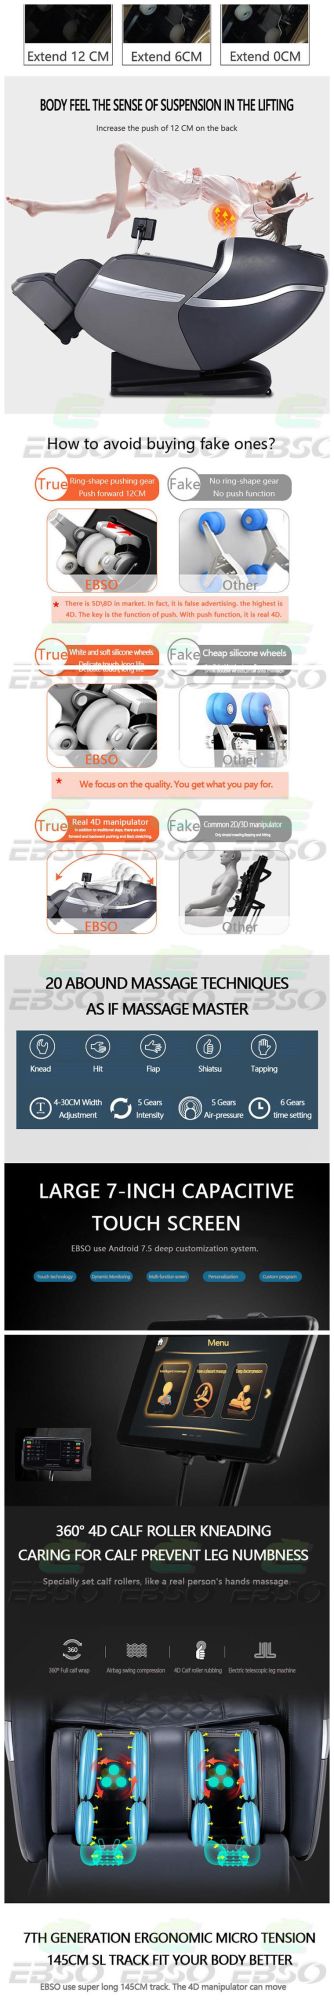 Massage Chair 4D Zero Gravity Luxury with Stretch Massage Chair Decompression Large Gua Sha Massage Tool